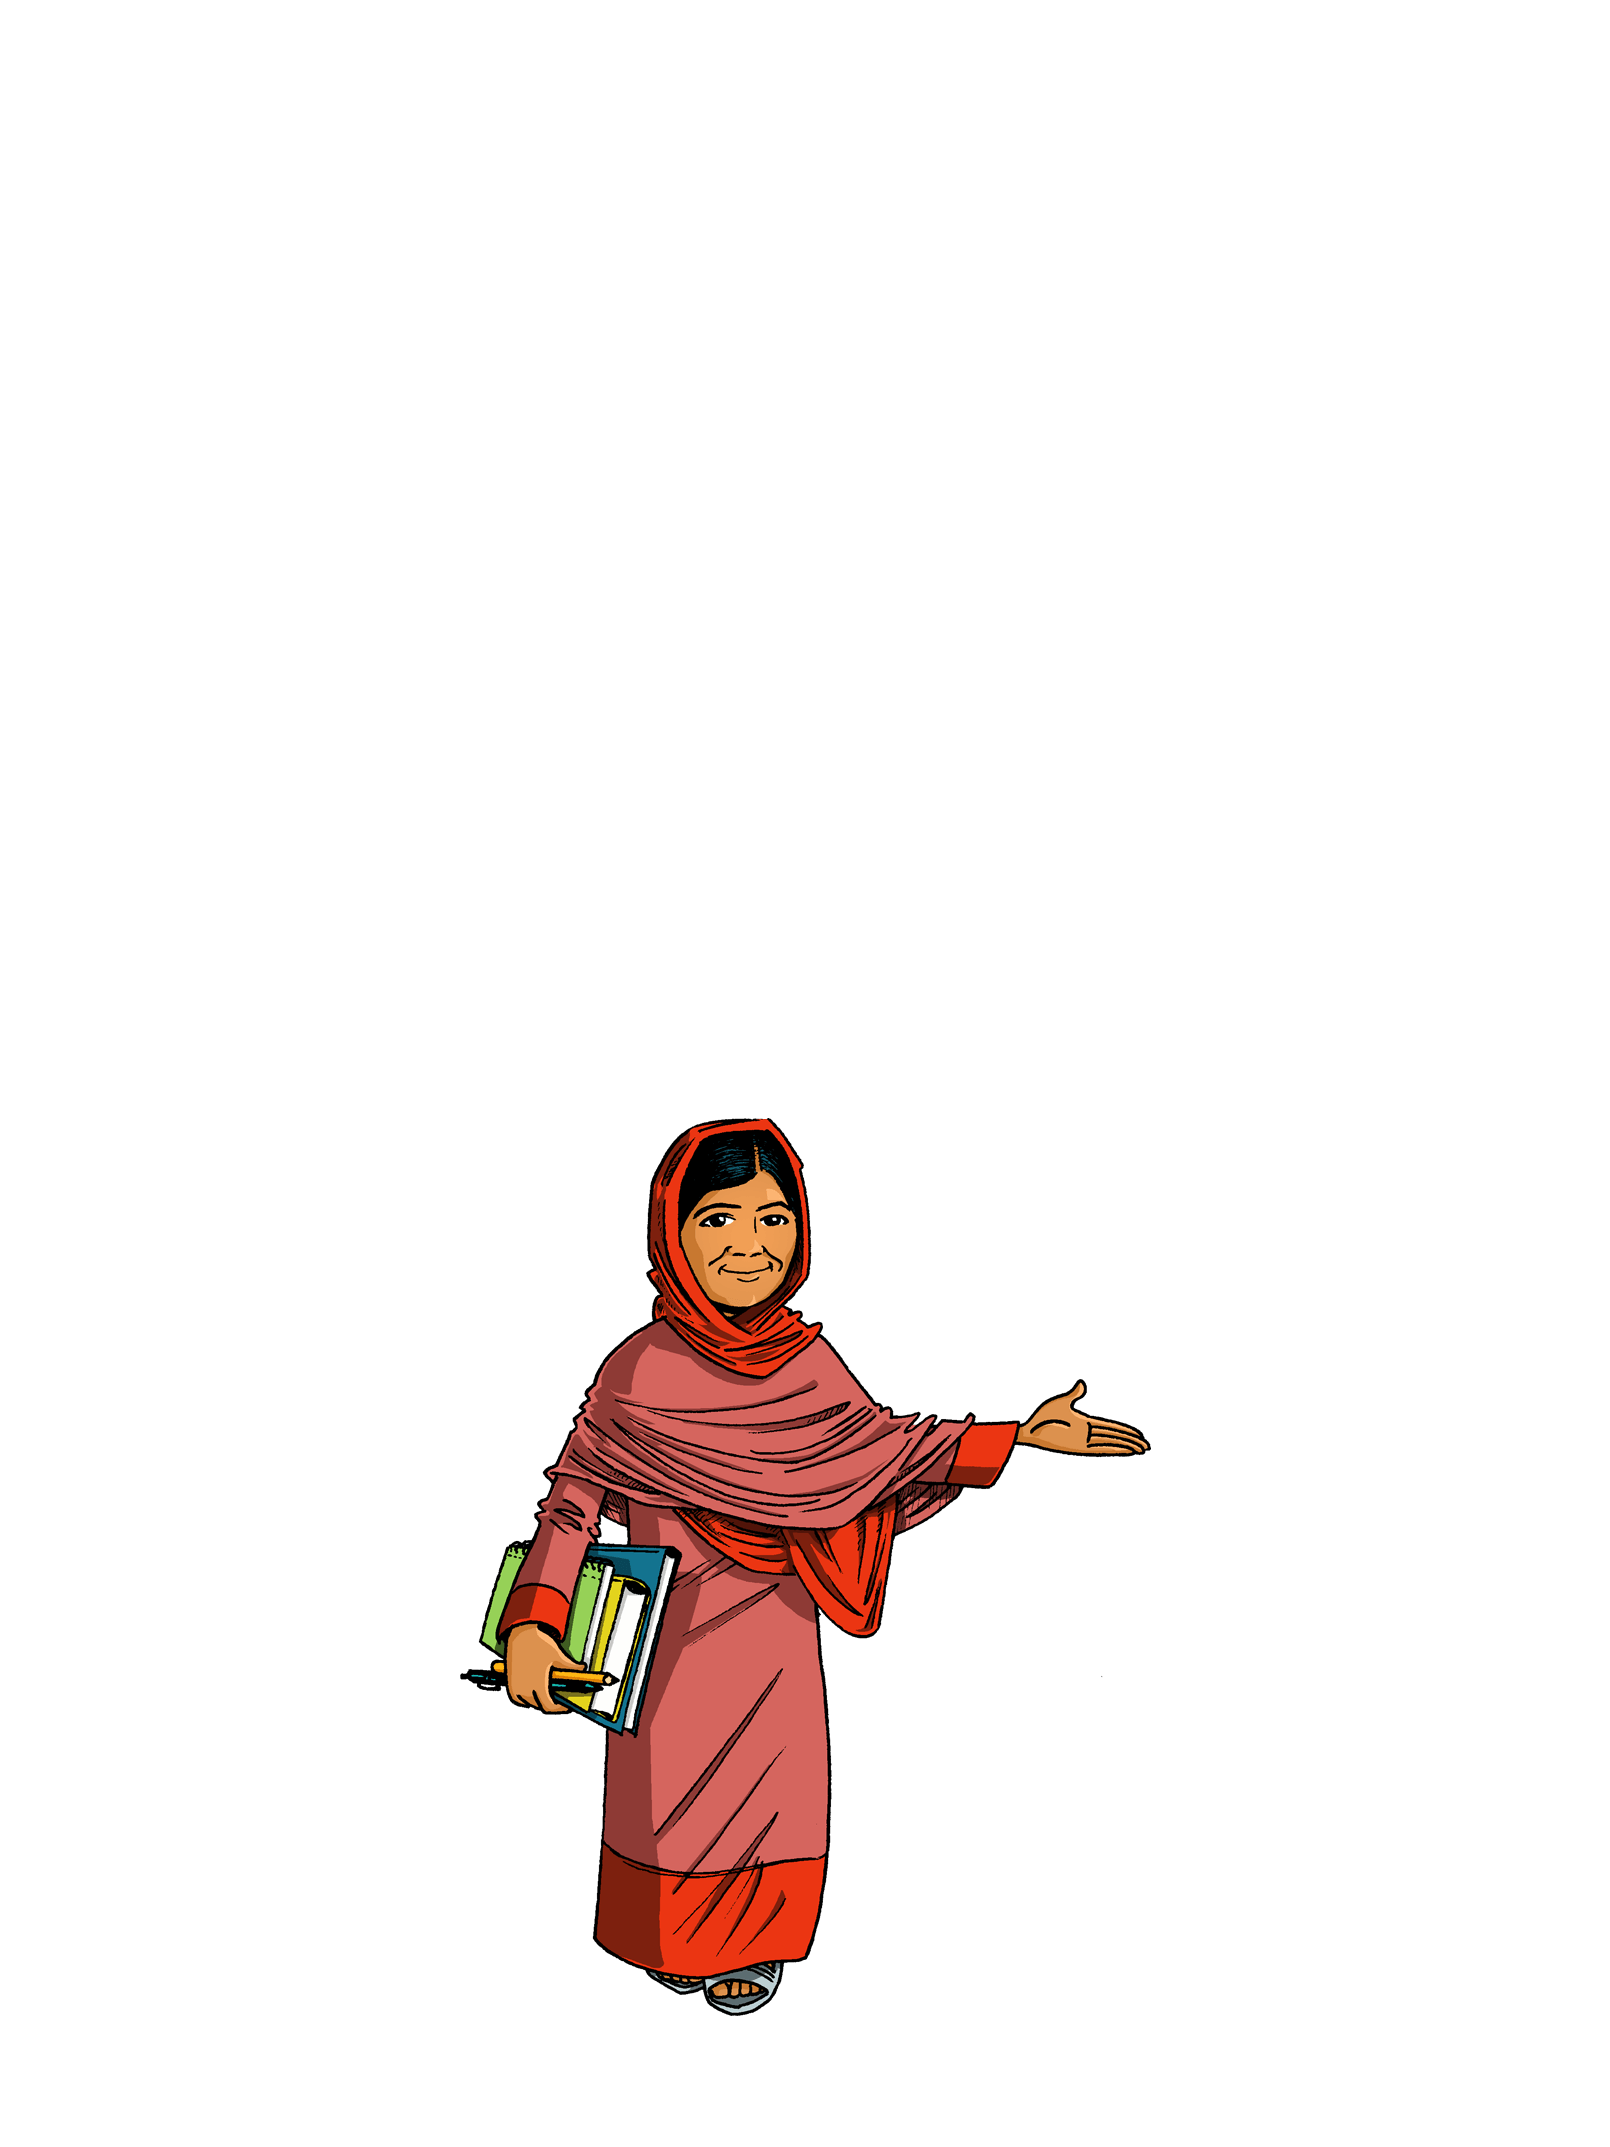 Illustrasjon av fredsprisvinner, Malala